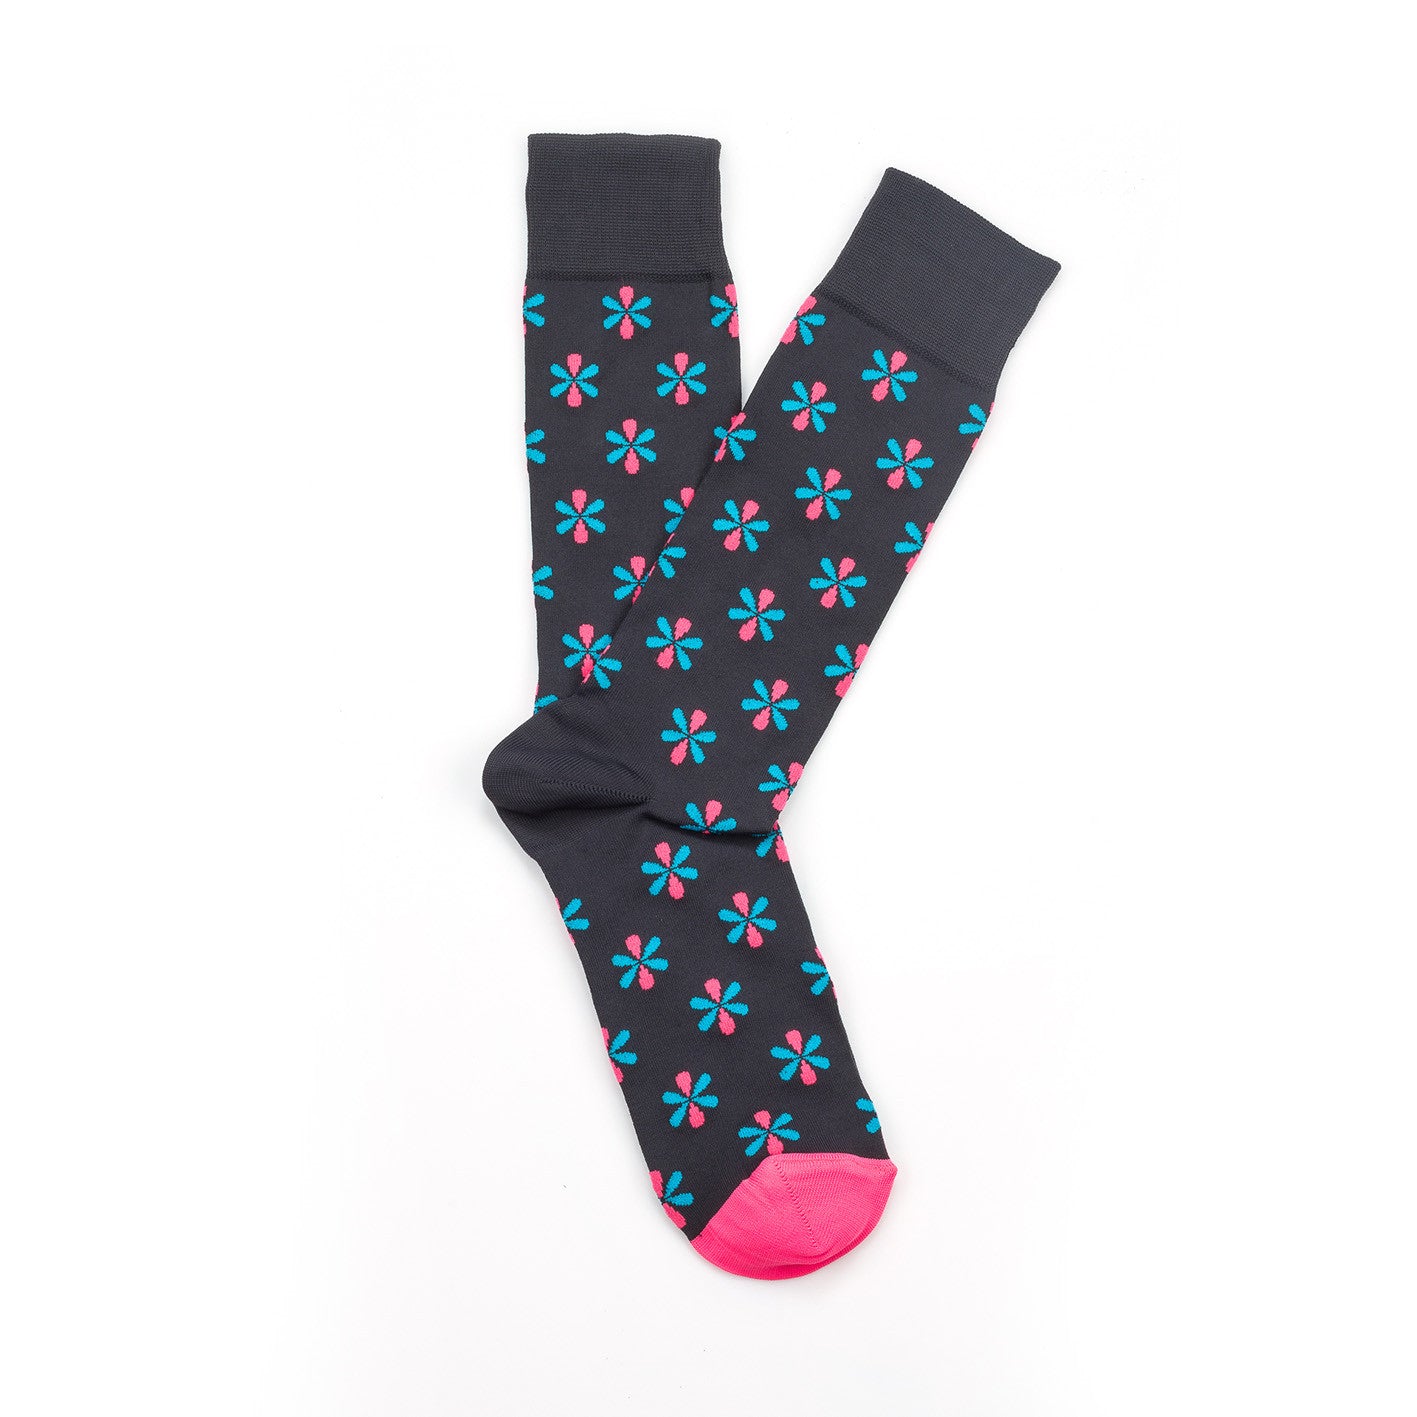 Giraffecool-Giraffe-Cool-Brand-Dark-Grey-Blue-And-Pink-Flowers-Microfiber-Fashion-Socks-Open-Pair